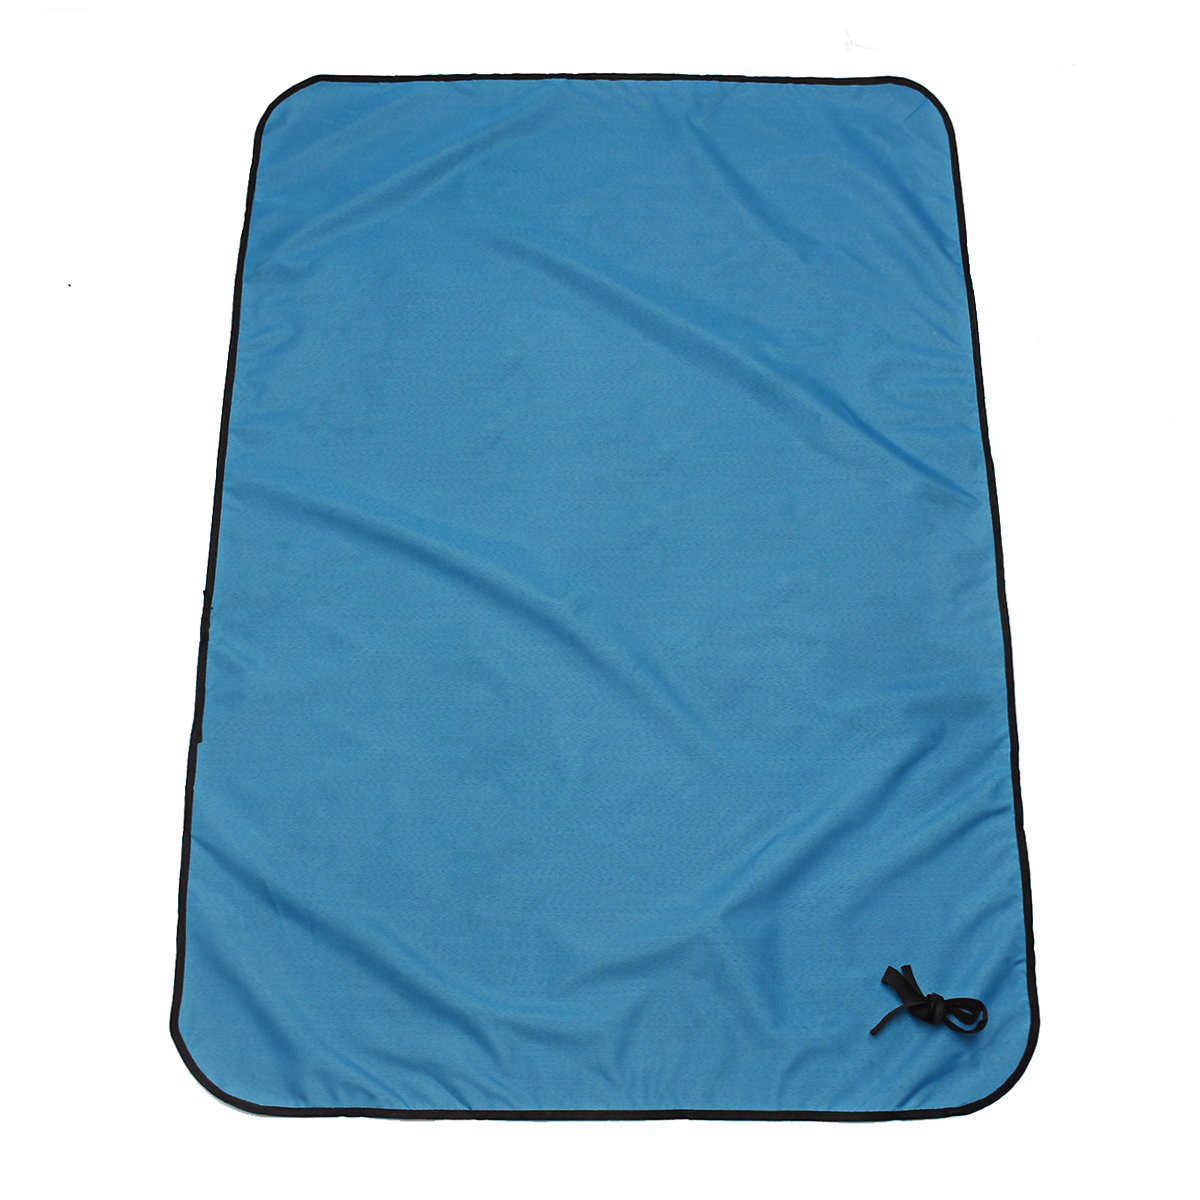 200x150cm-Picnic-Mat-Sleeping-Blanket-Outdoor-Camping-Travel-Waterproof-Beach-Pad-1532100-1